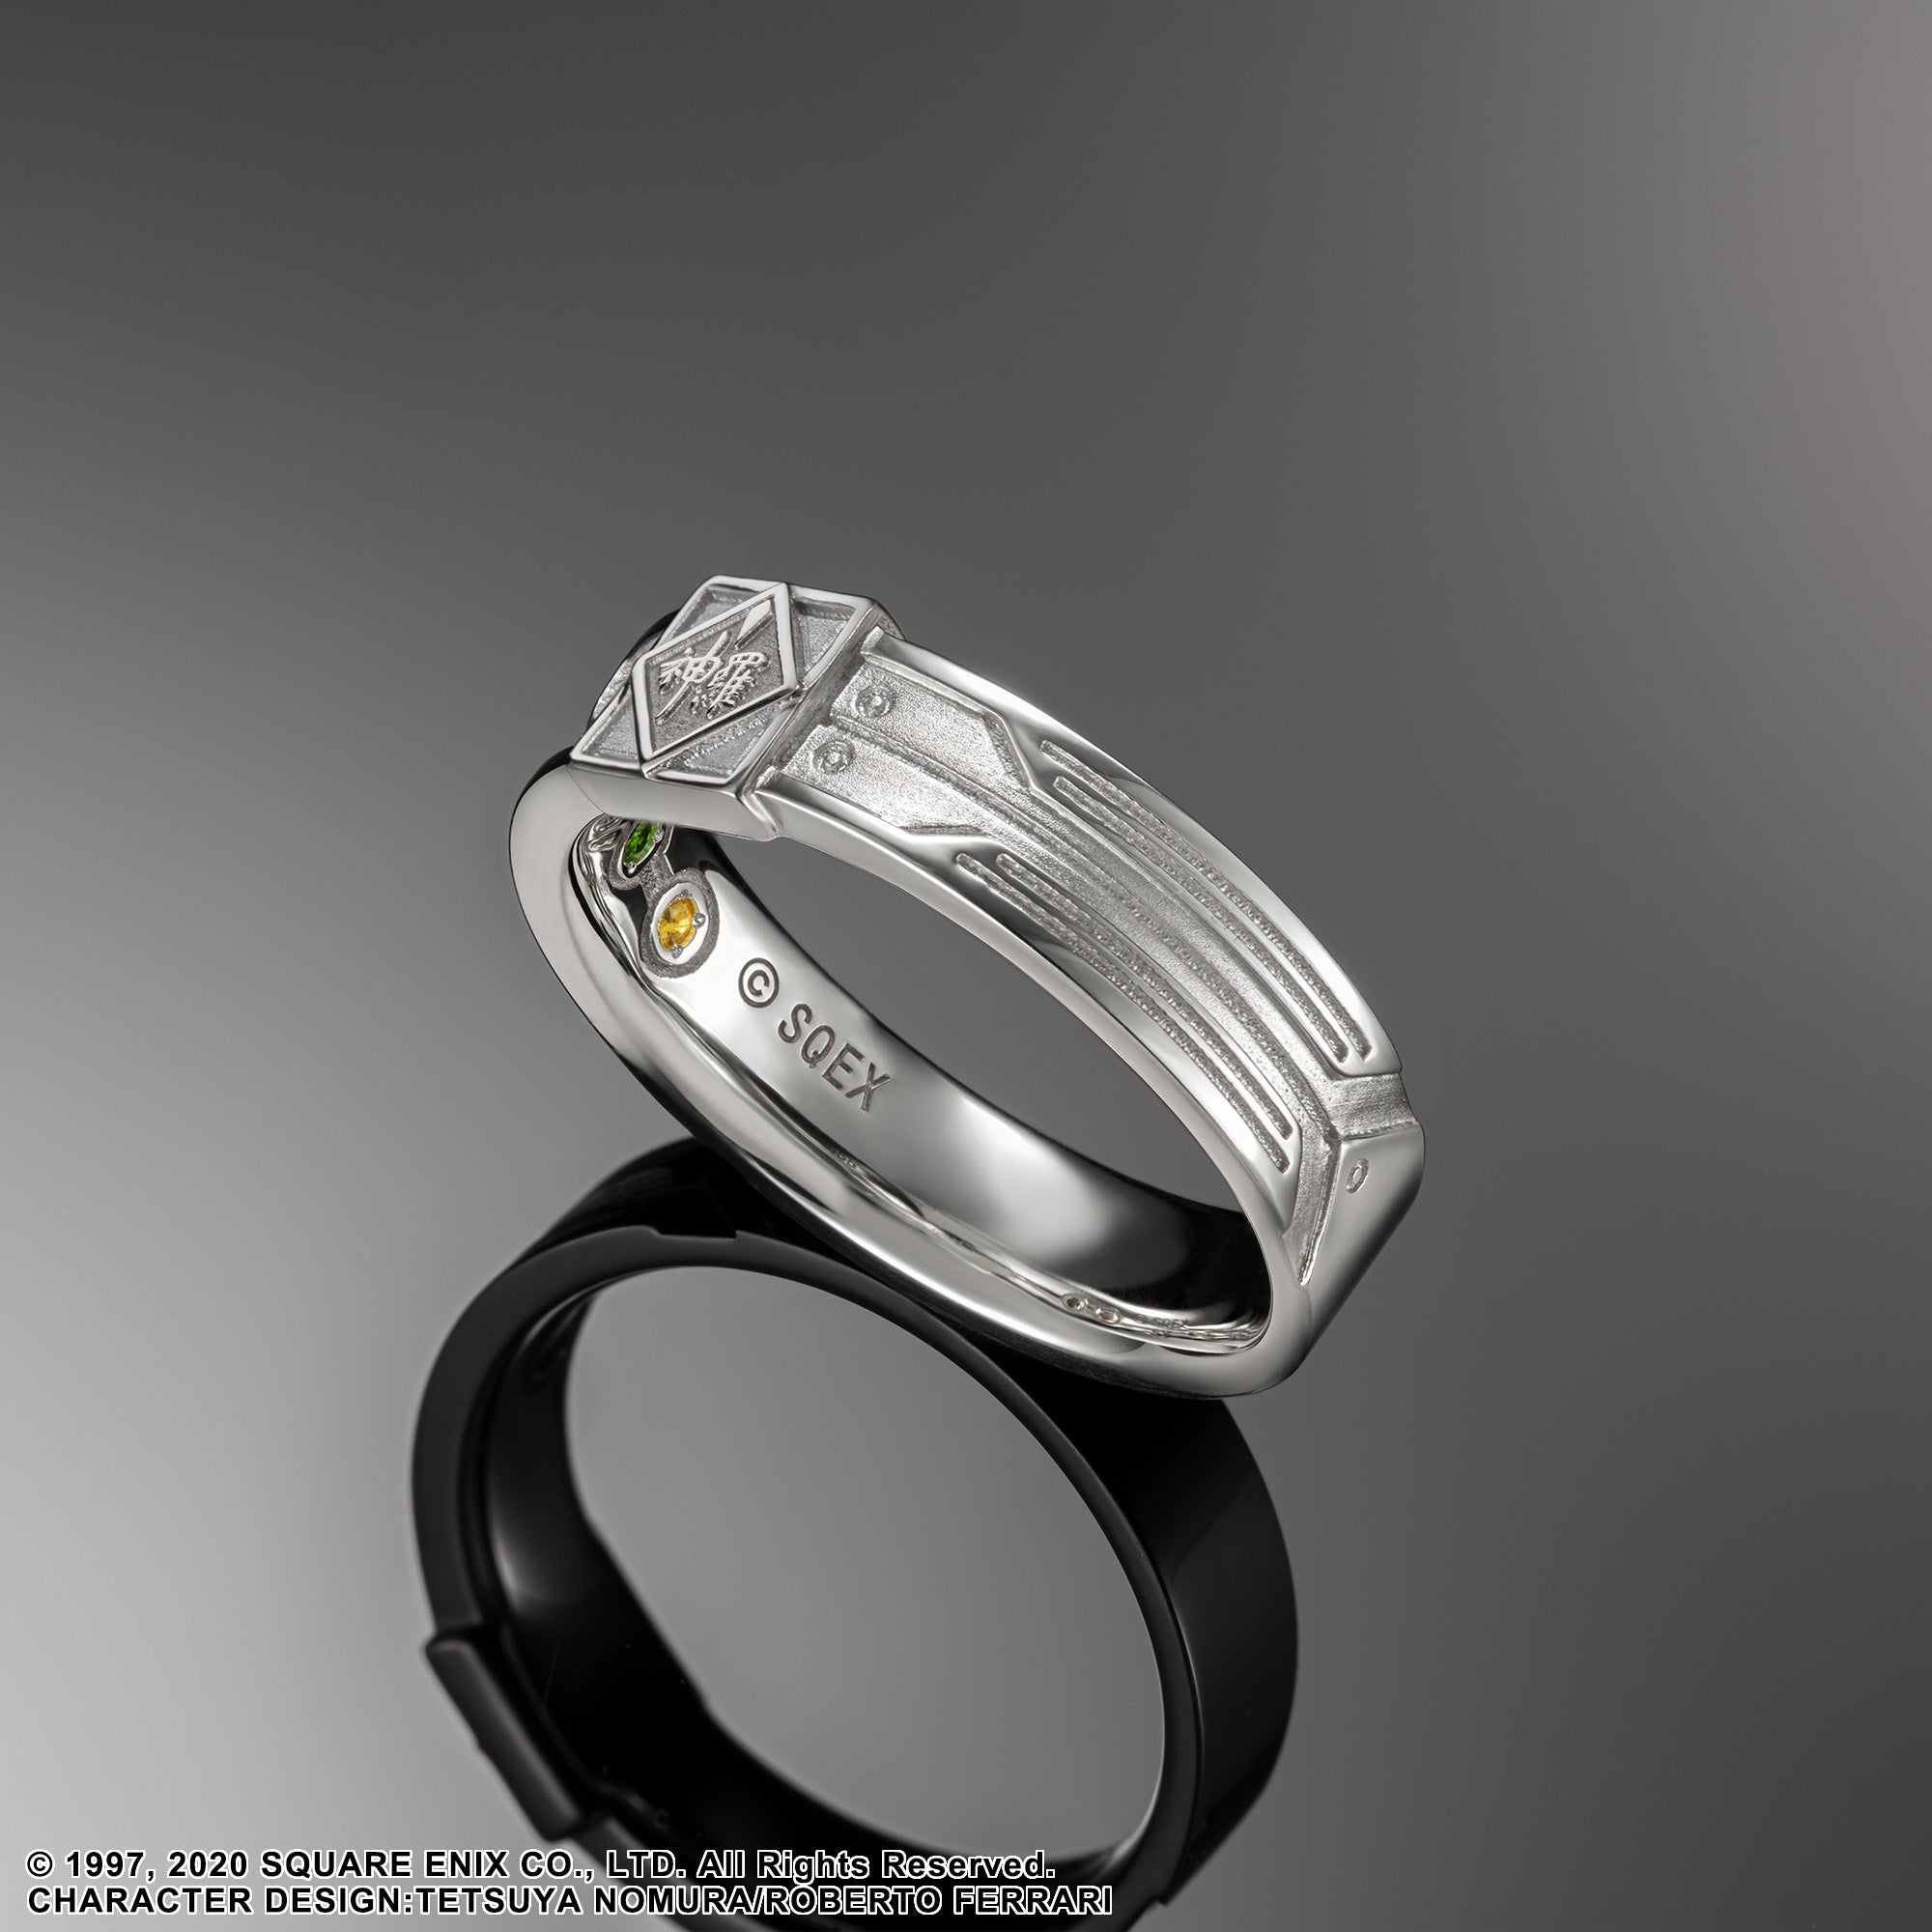 FINAL FANTASY VII Silver Ring SHINRA MATERIA TYPE A (Emerald + Blue Sapphire) Size 11